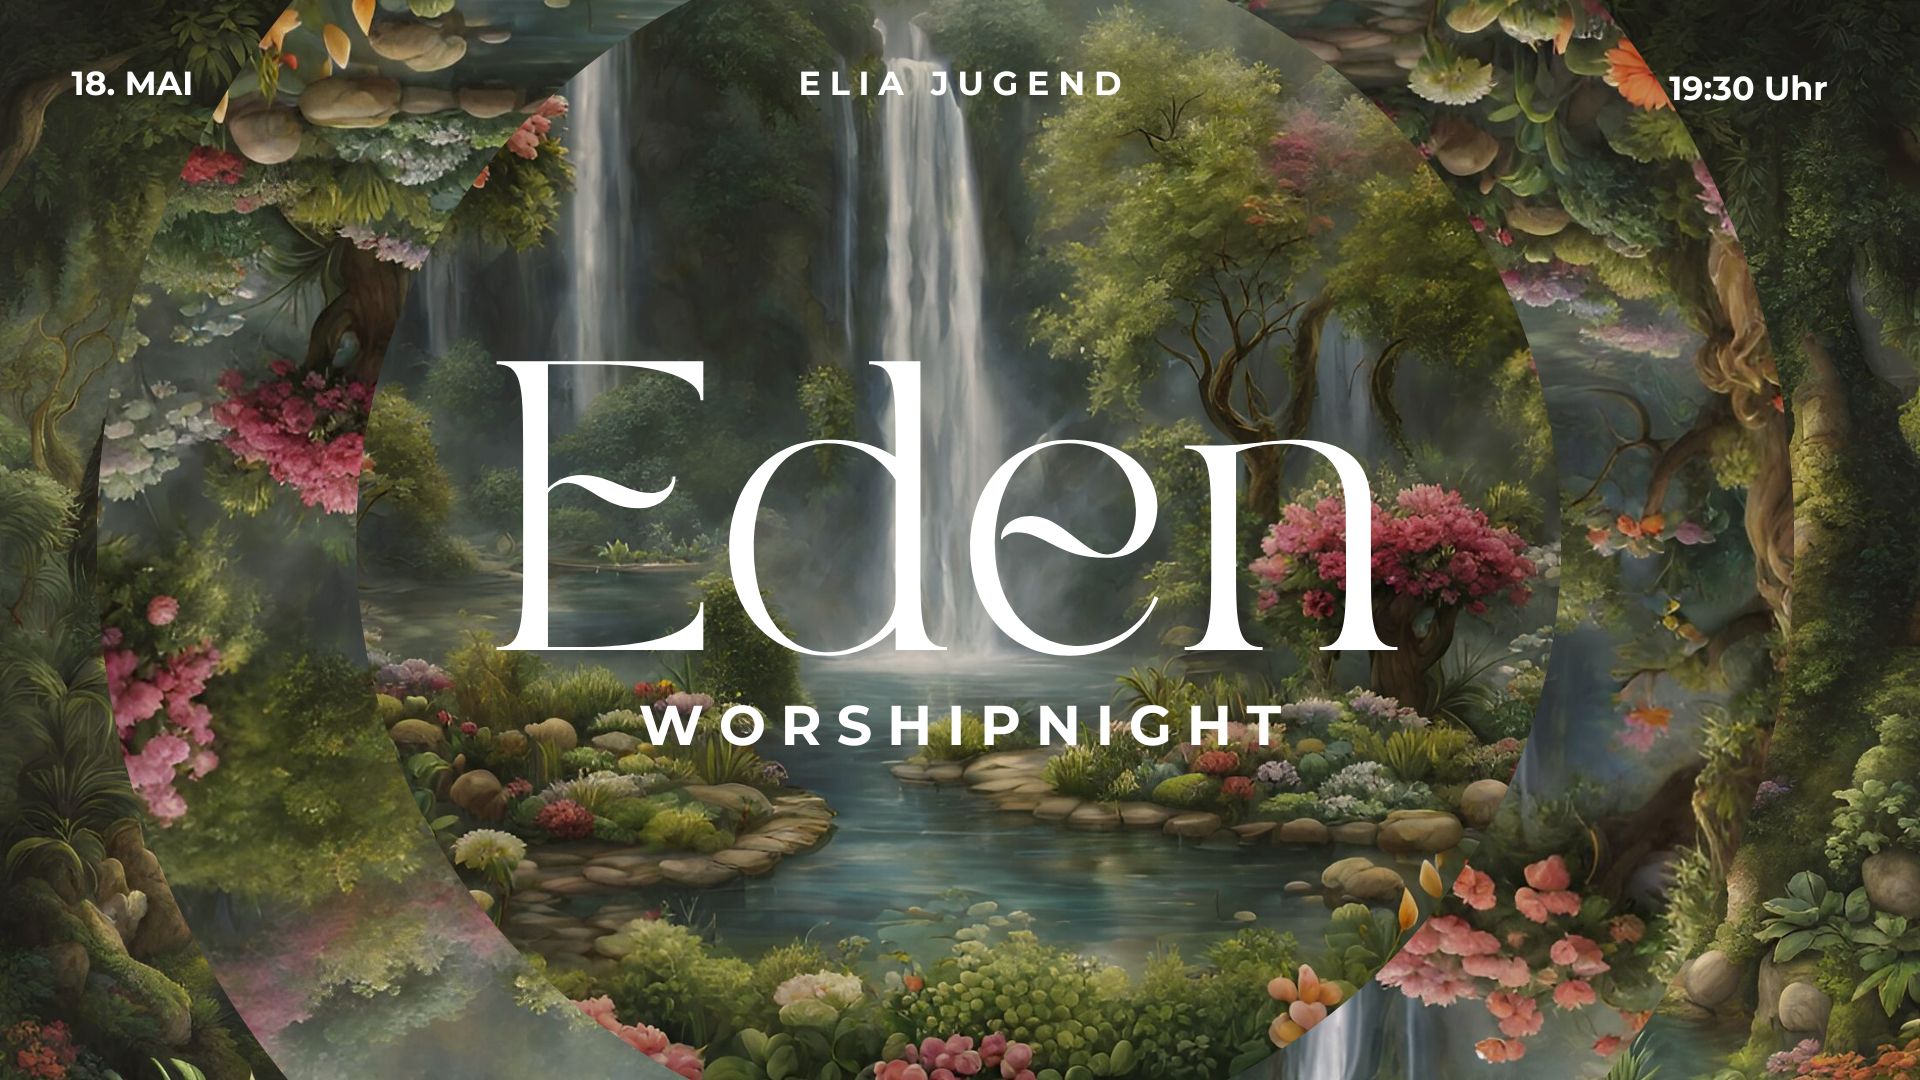 EDEN WORSHIP NIGHT